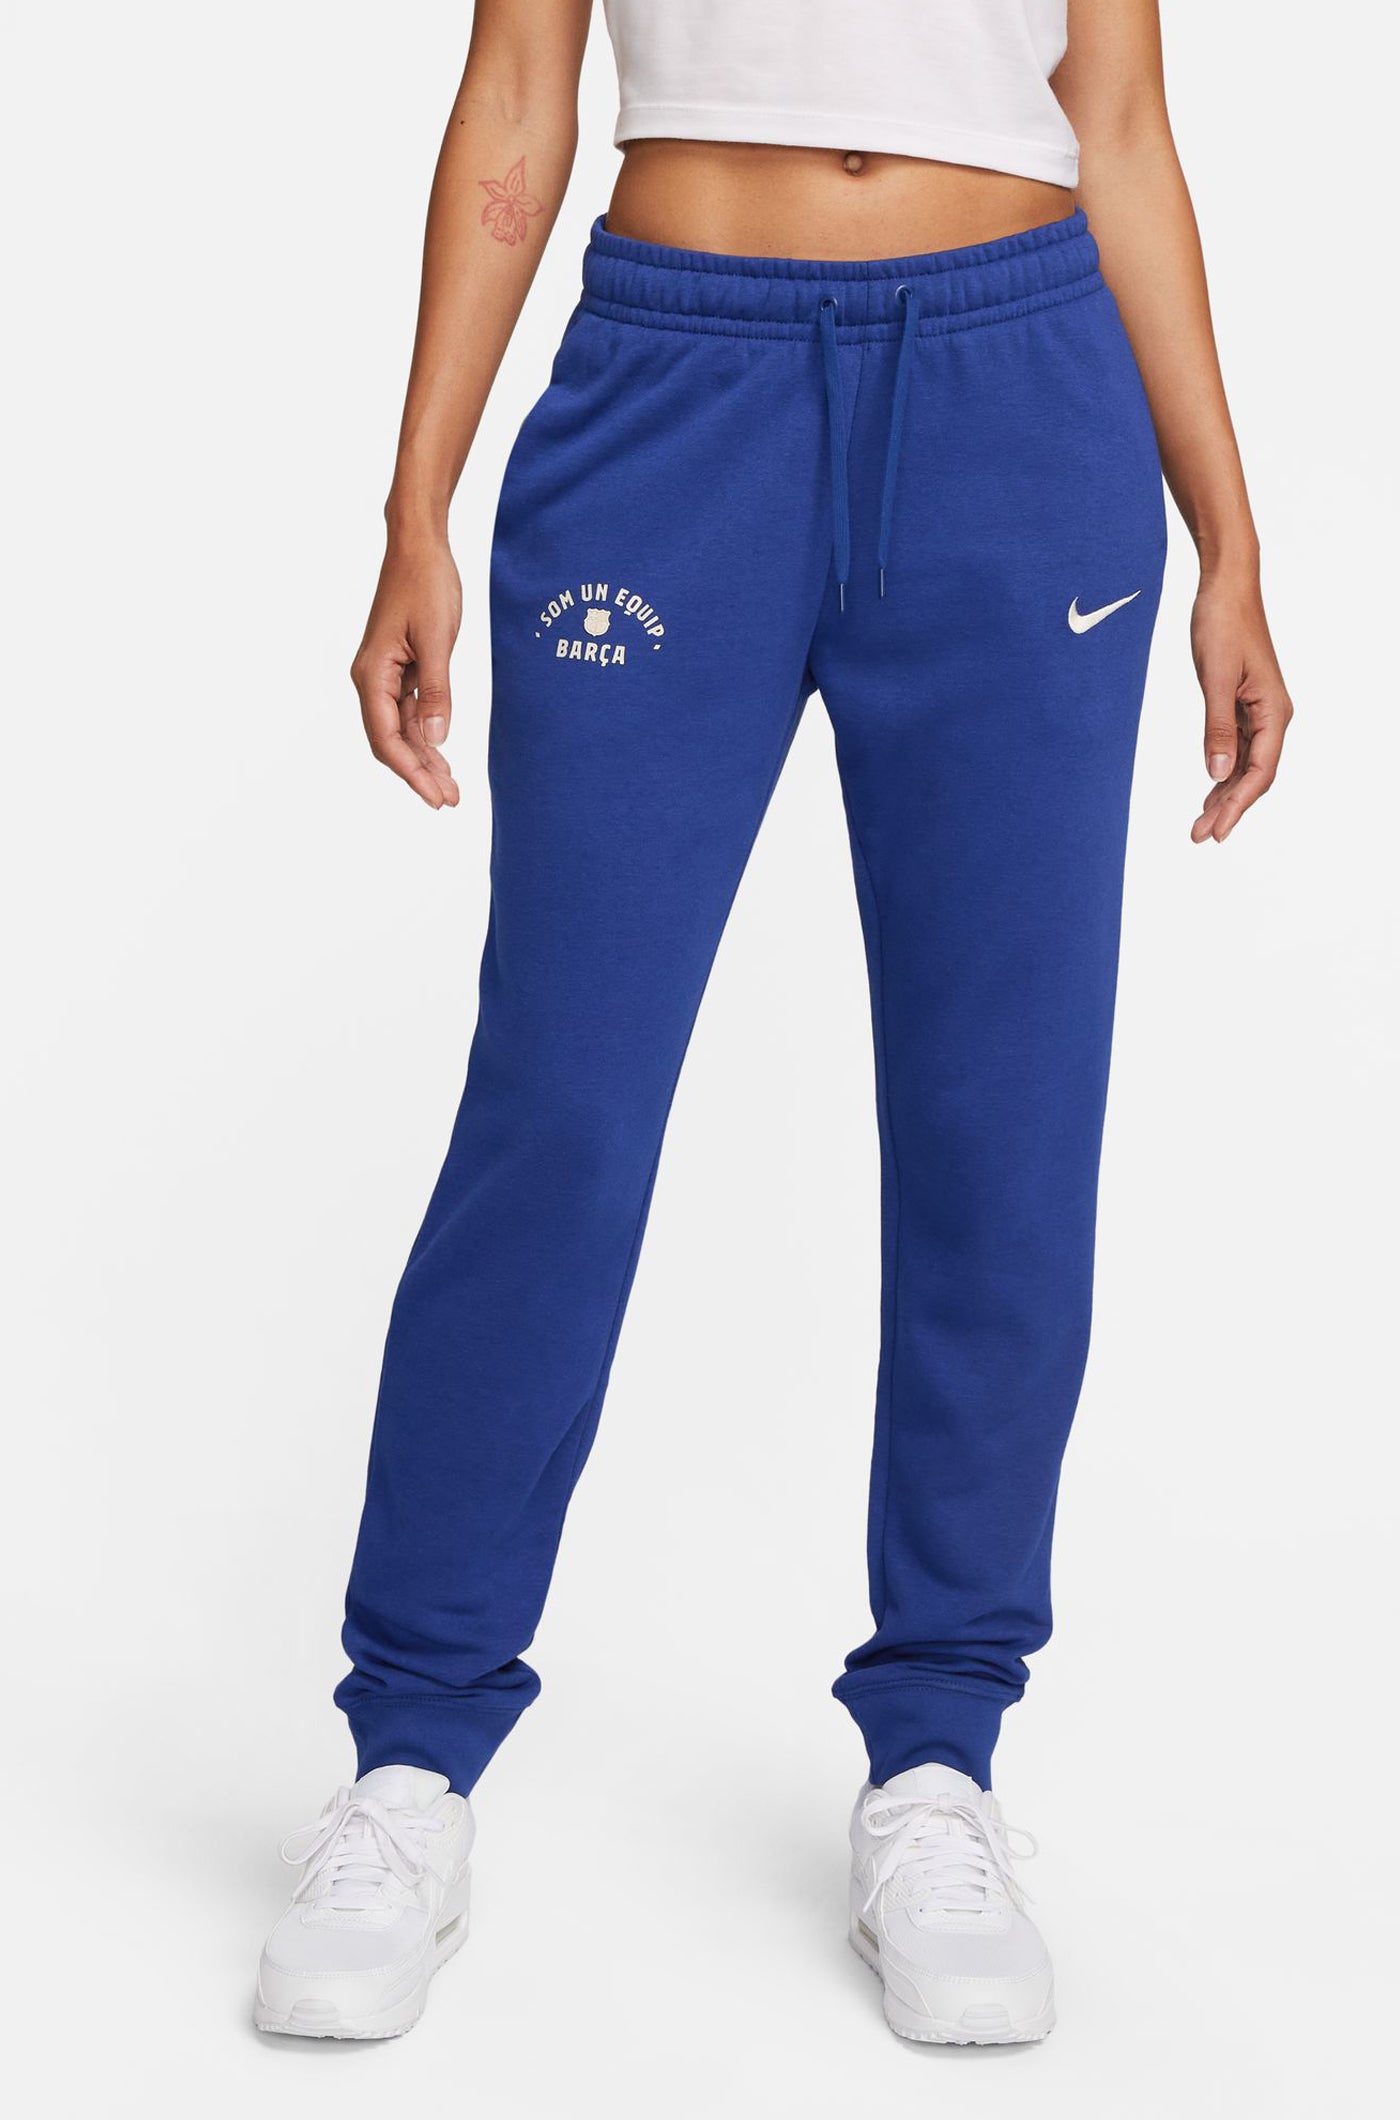 Pantalons som un equip Barça Nike - Dona